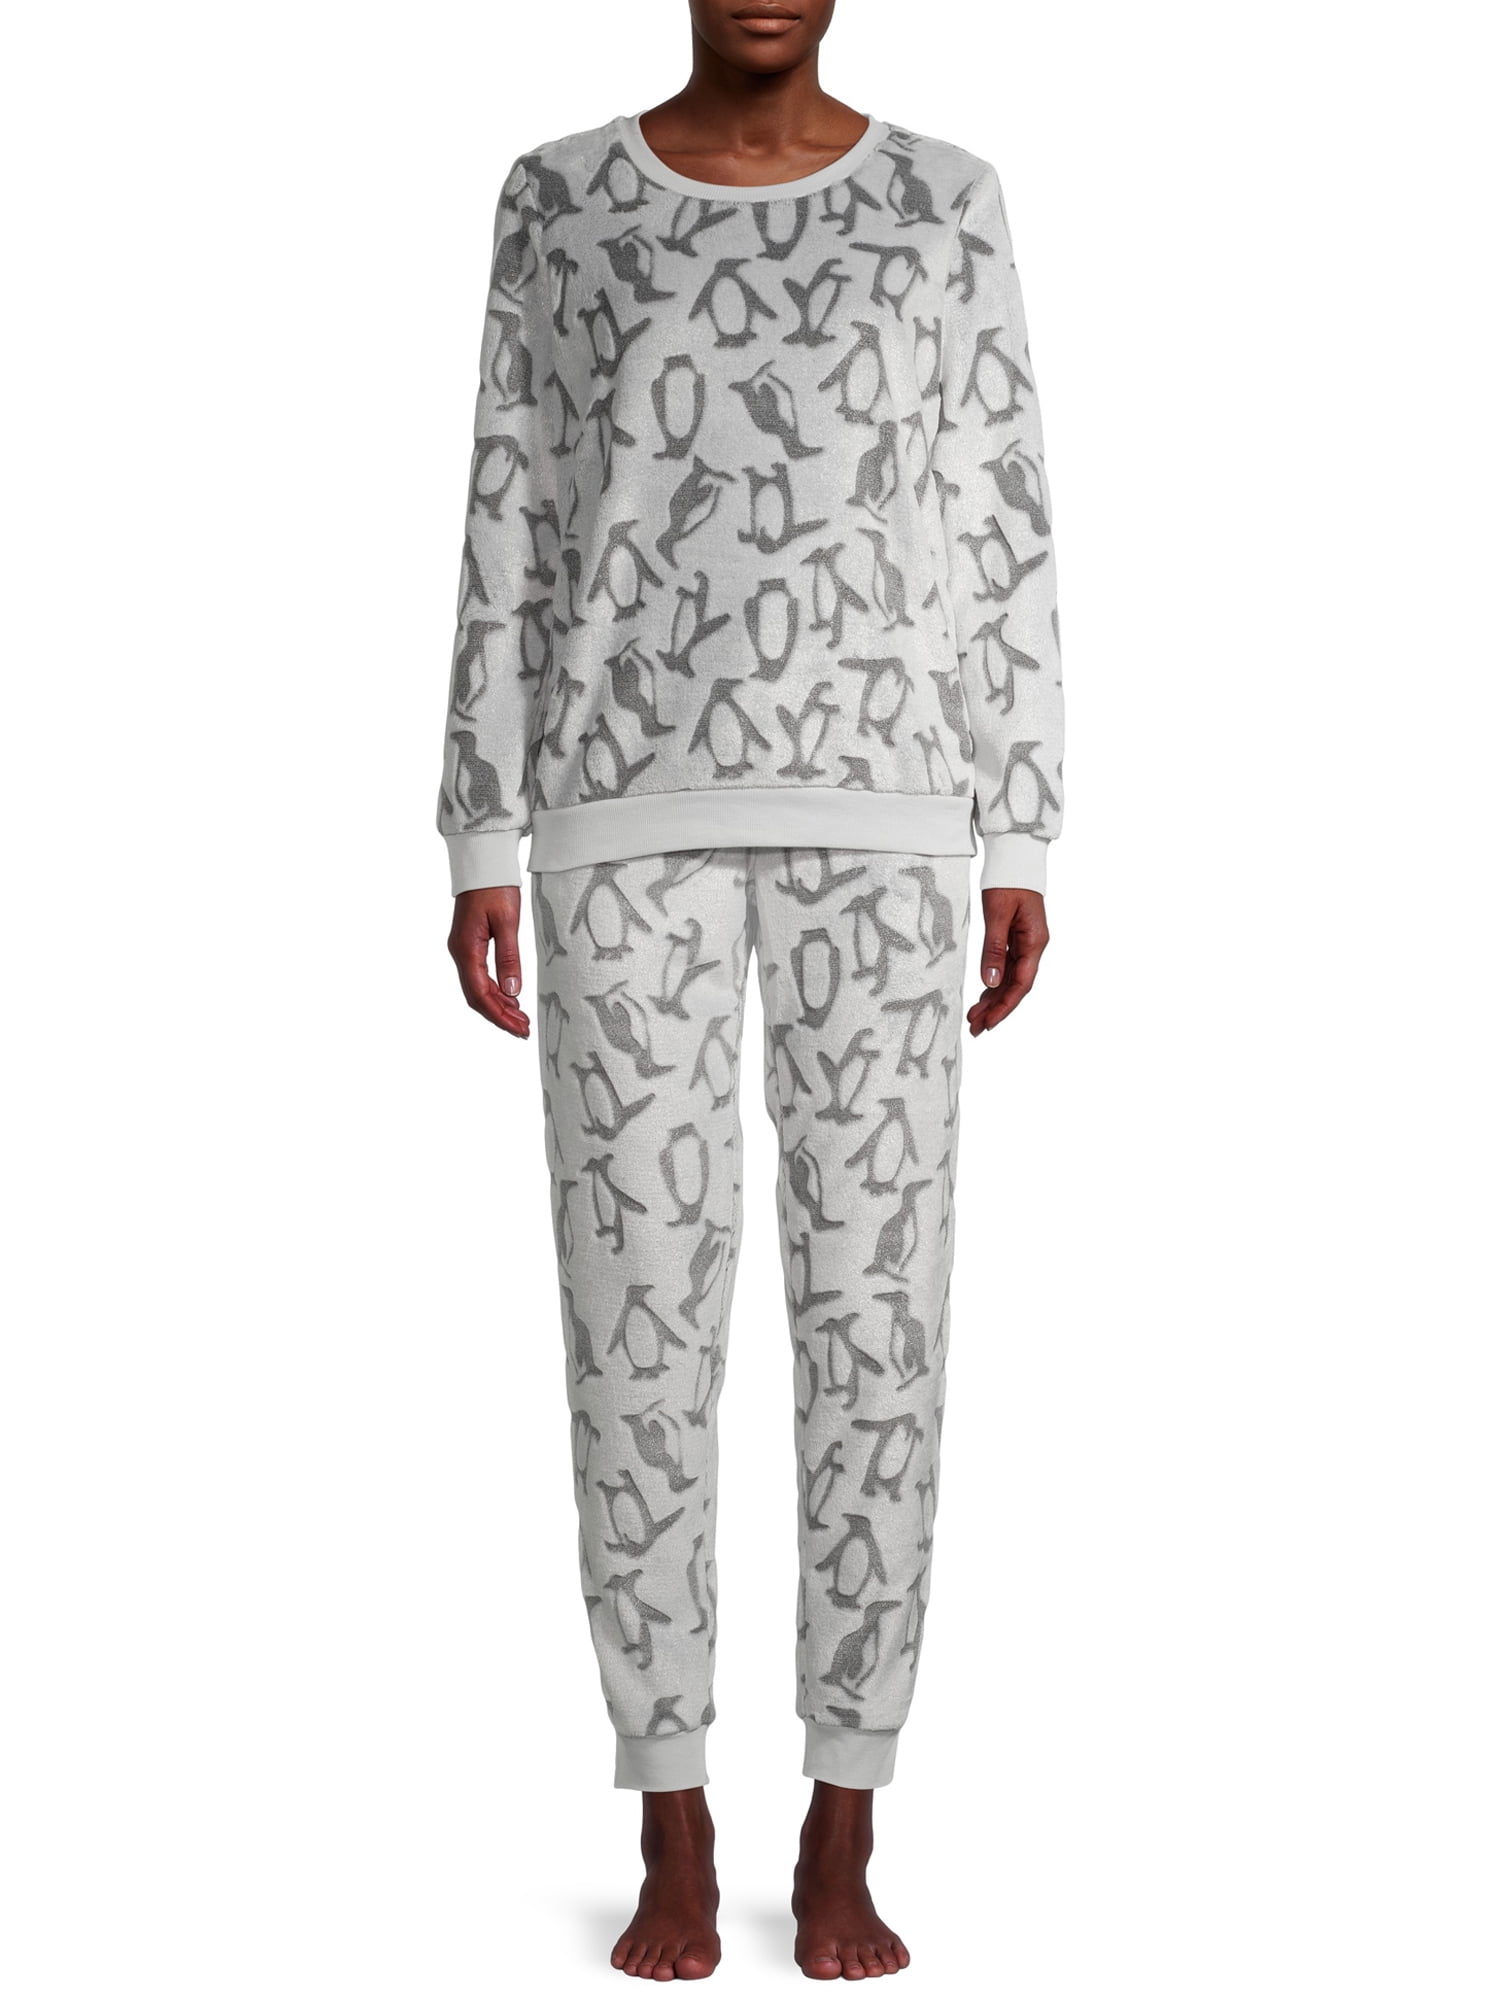 Louis Vuitton Supreme Pajamas - For Sale on 1stDibs  louis vuitton pajamas  for sale, louis vuitton pajamas set, louis vuitton pajama set